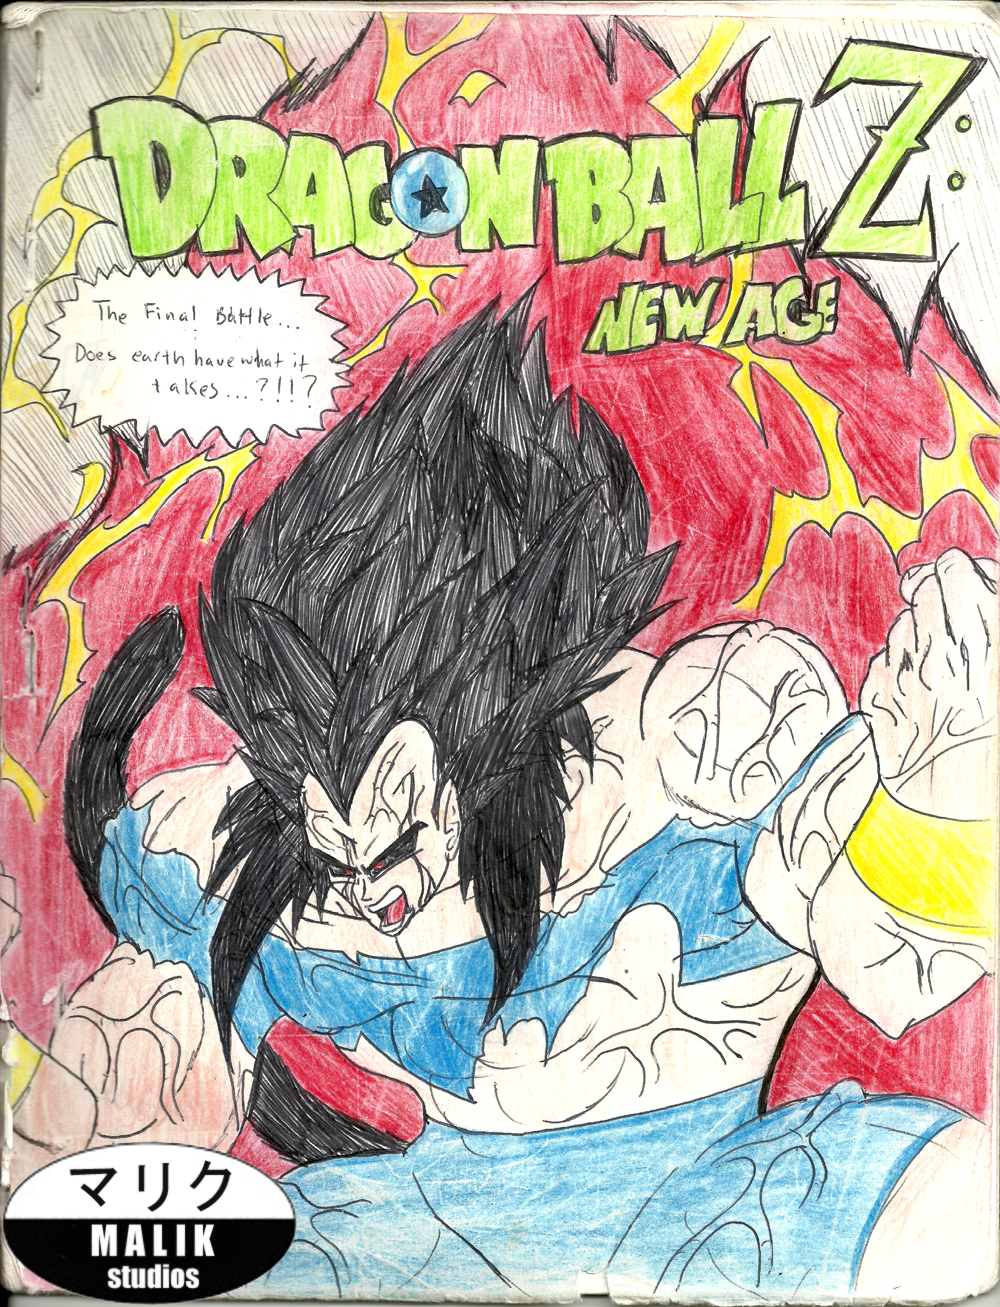 Dragonball Z Manga Panel Redraw by Audball9000 on DeviantArt